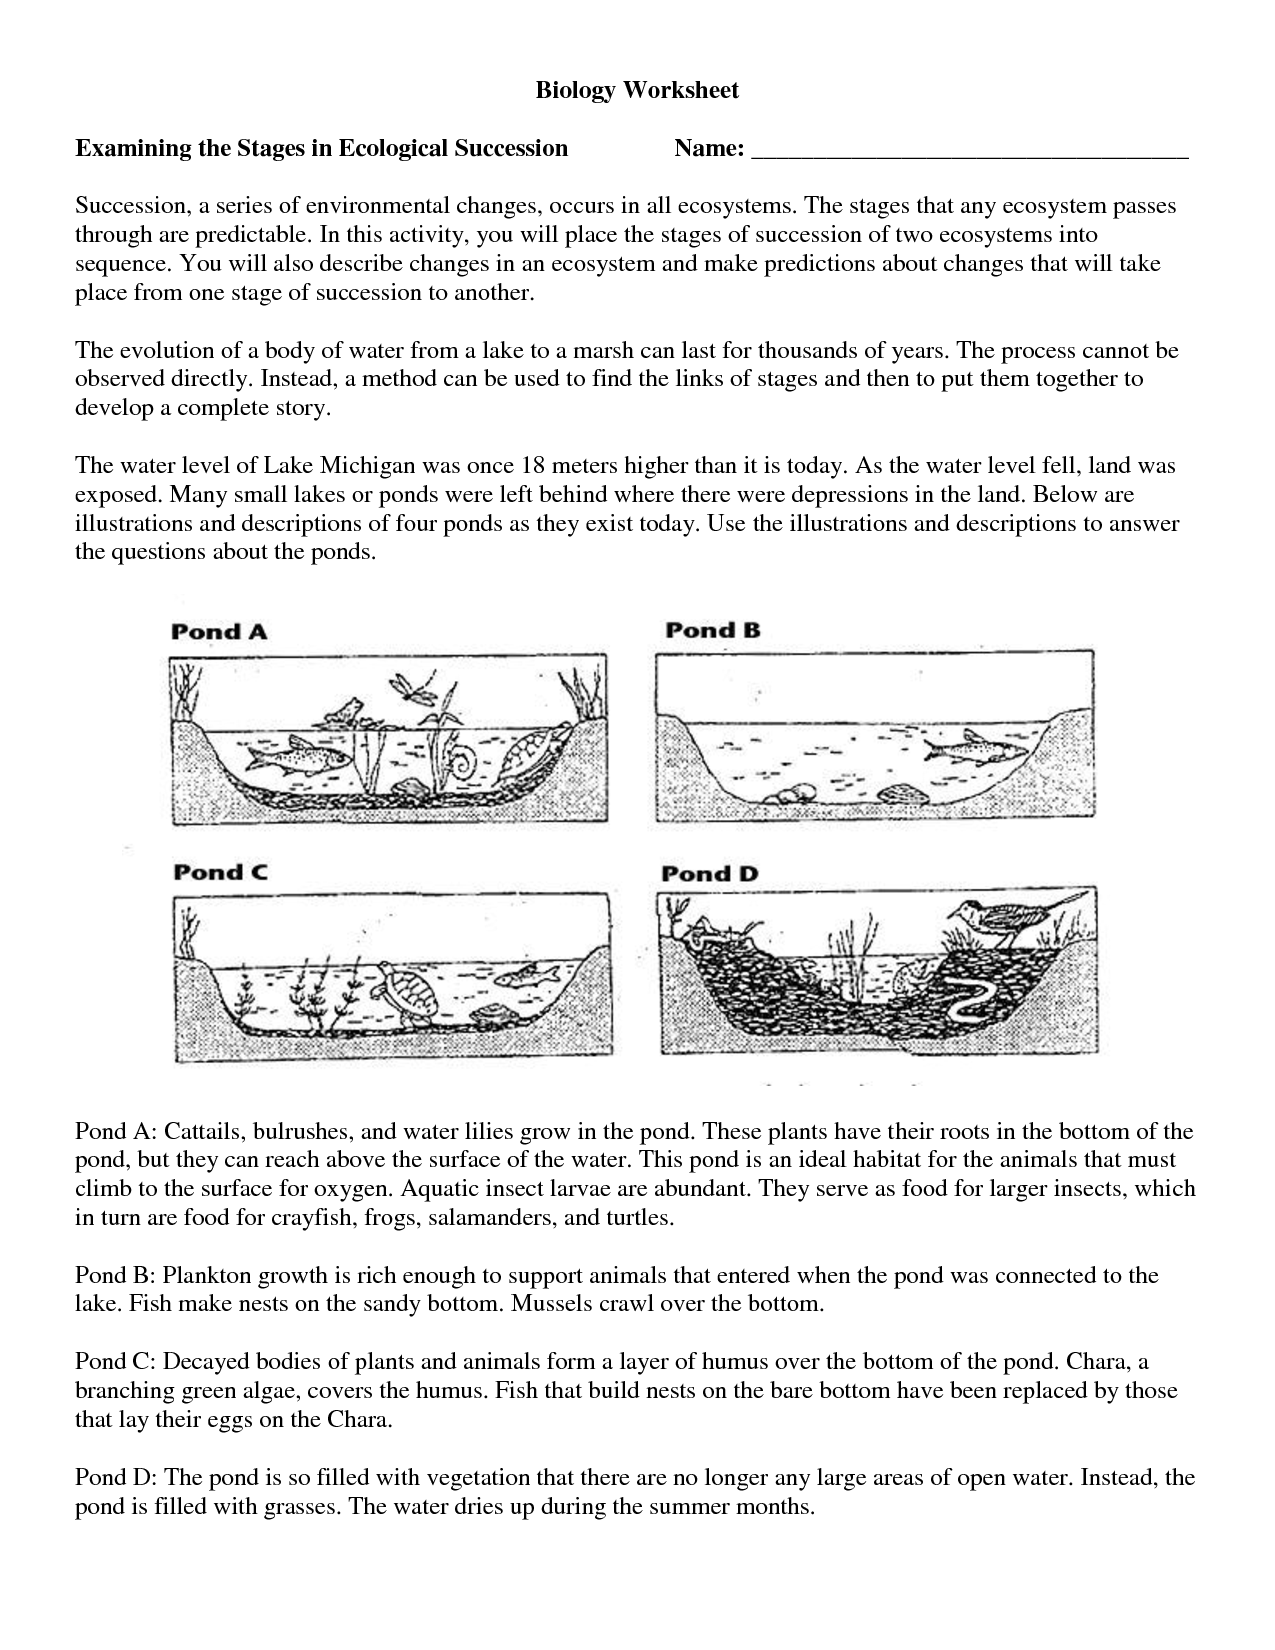 Marine Biology Worksheets High School